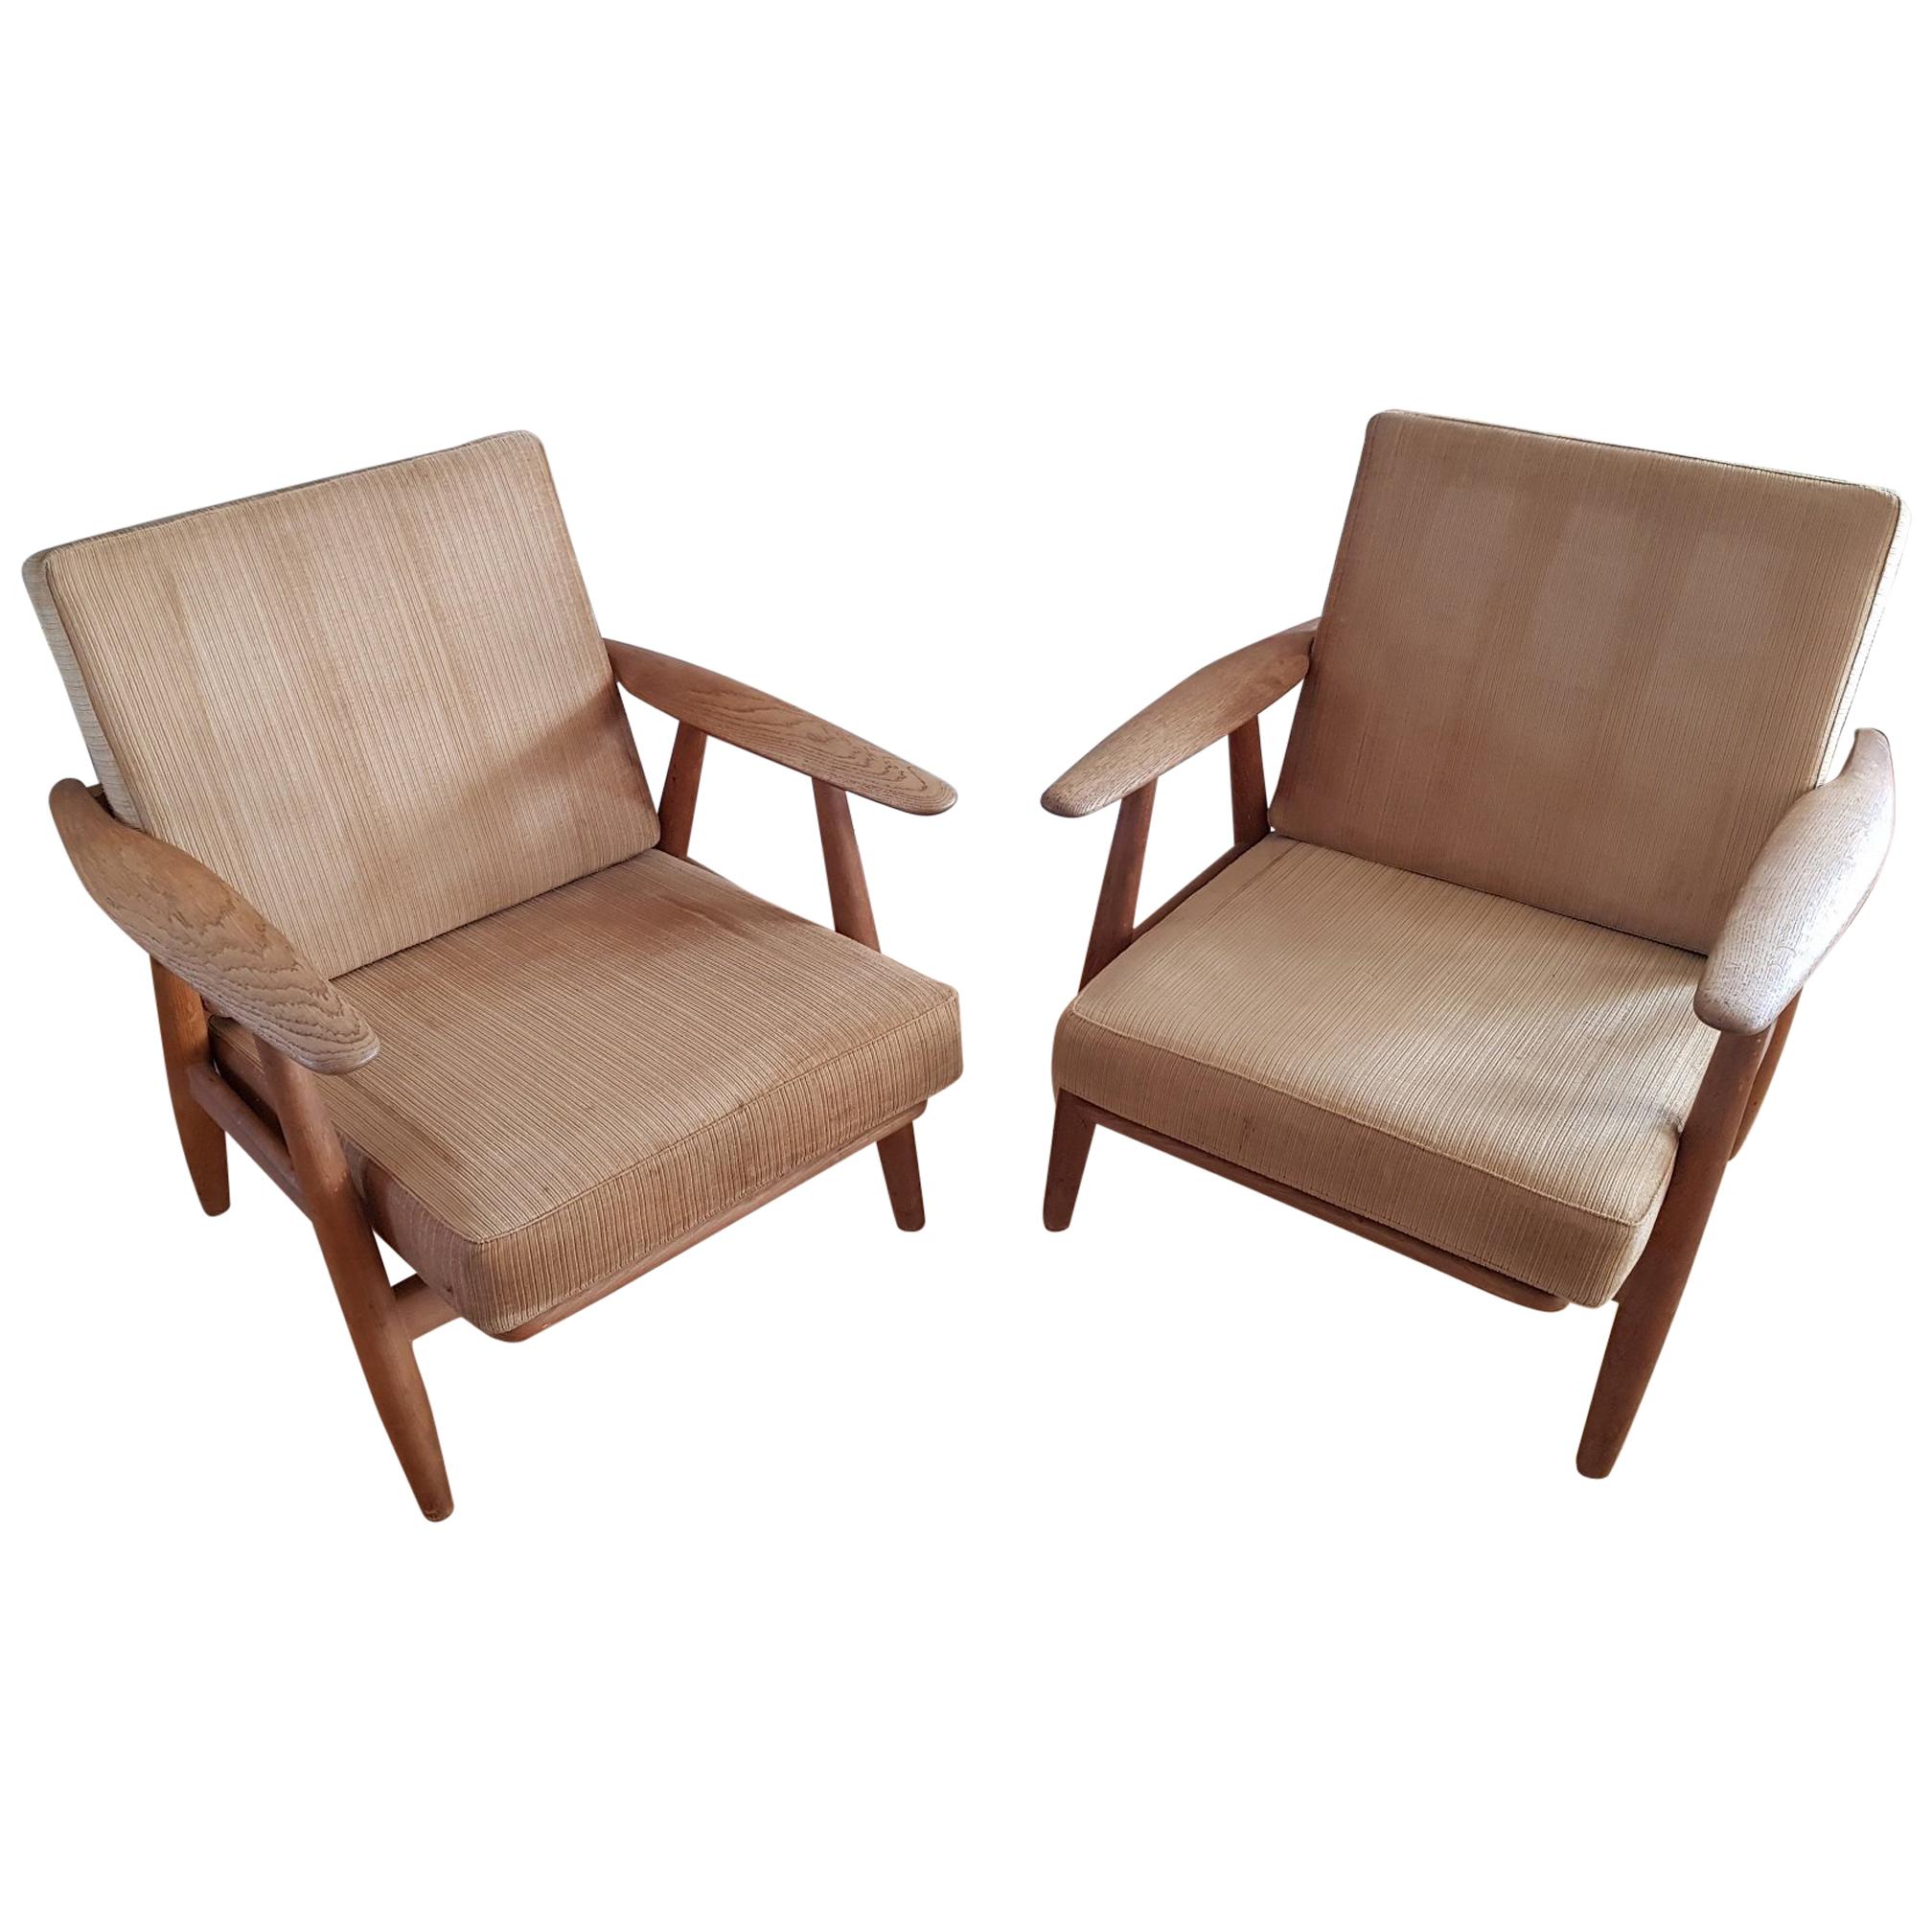 2 Vintage Cigar Chairs GE240 Oak and Fabric by Hans J. Wegner for GETAMA Denmark